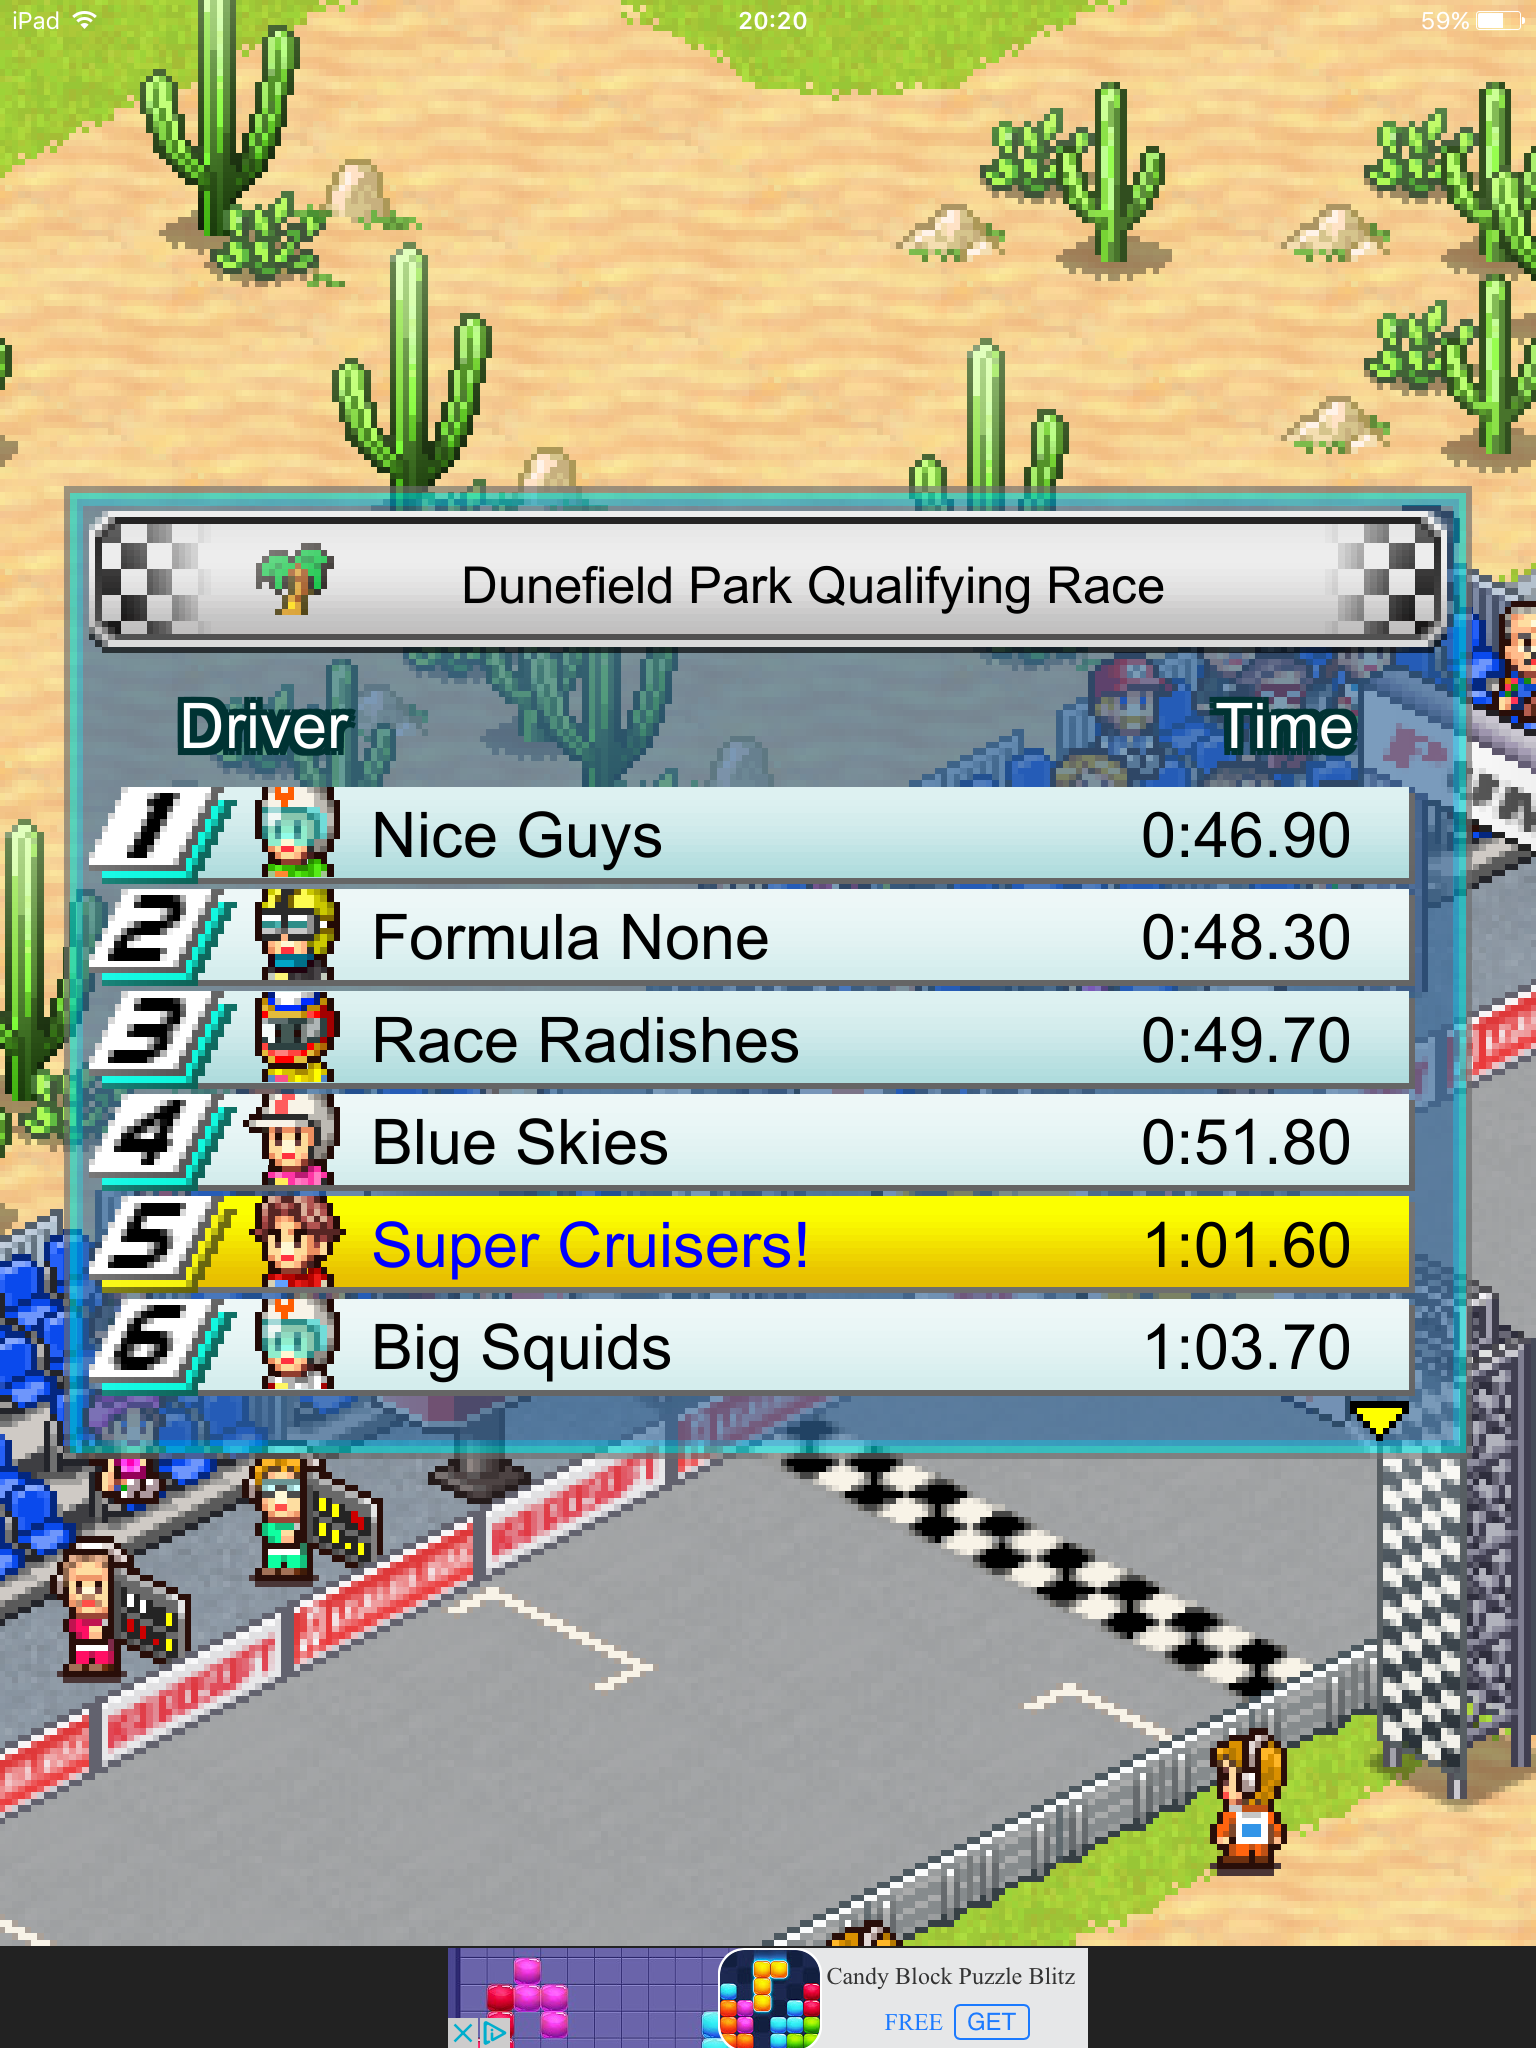 Grand Prix Story 2 Race Results